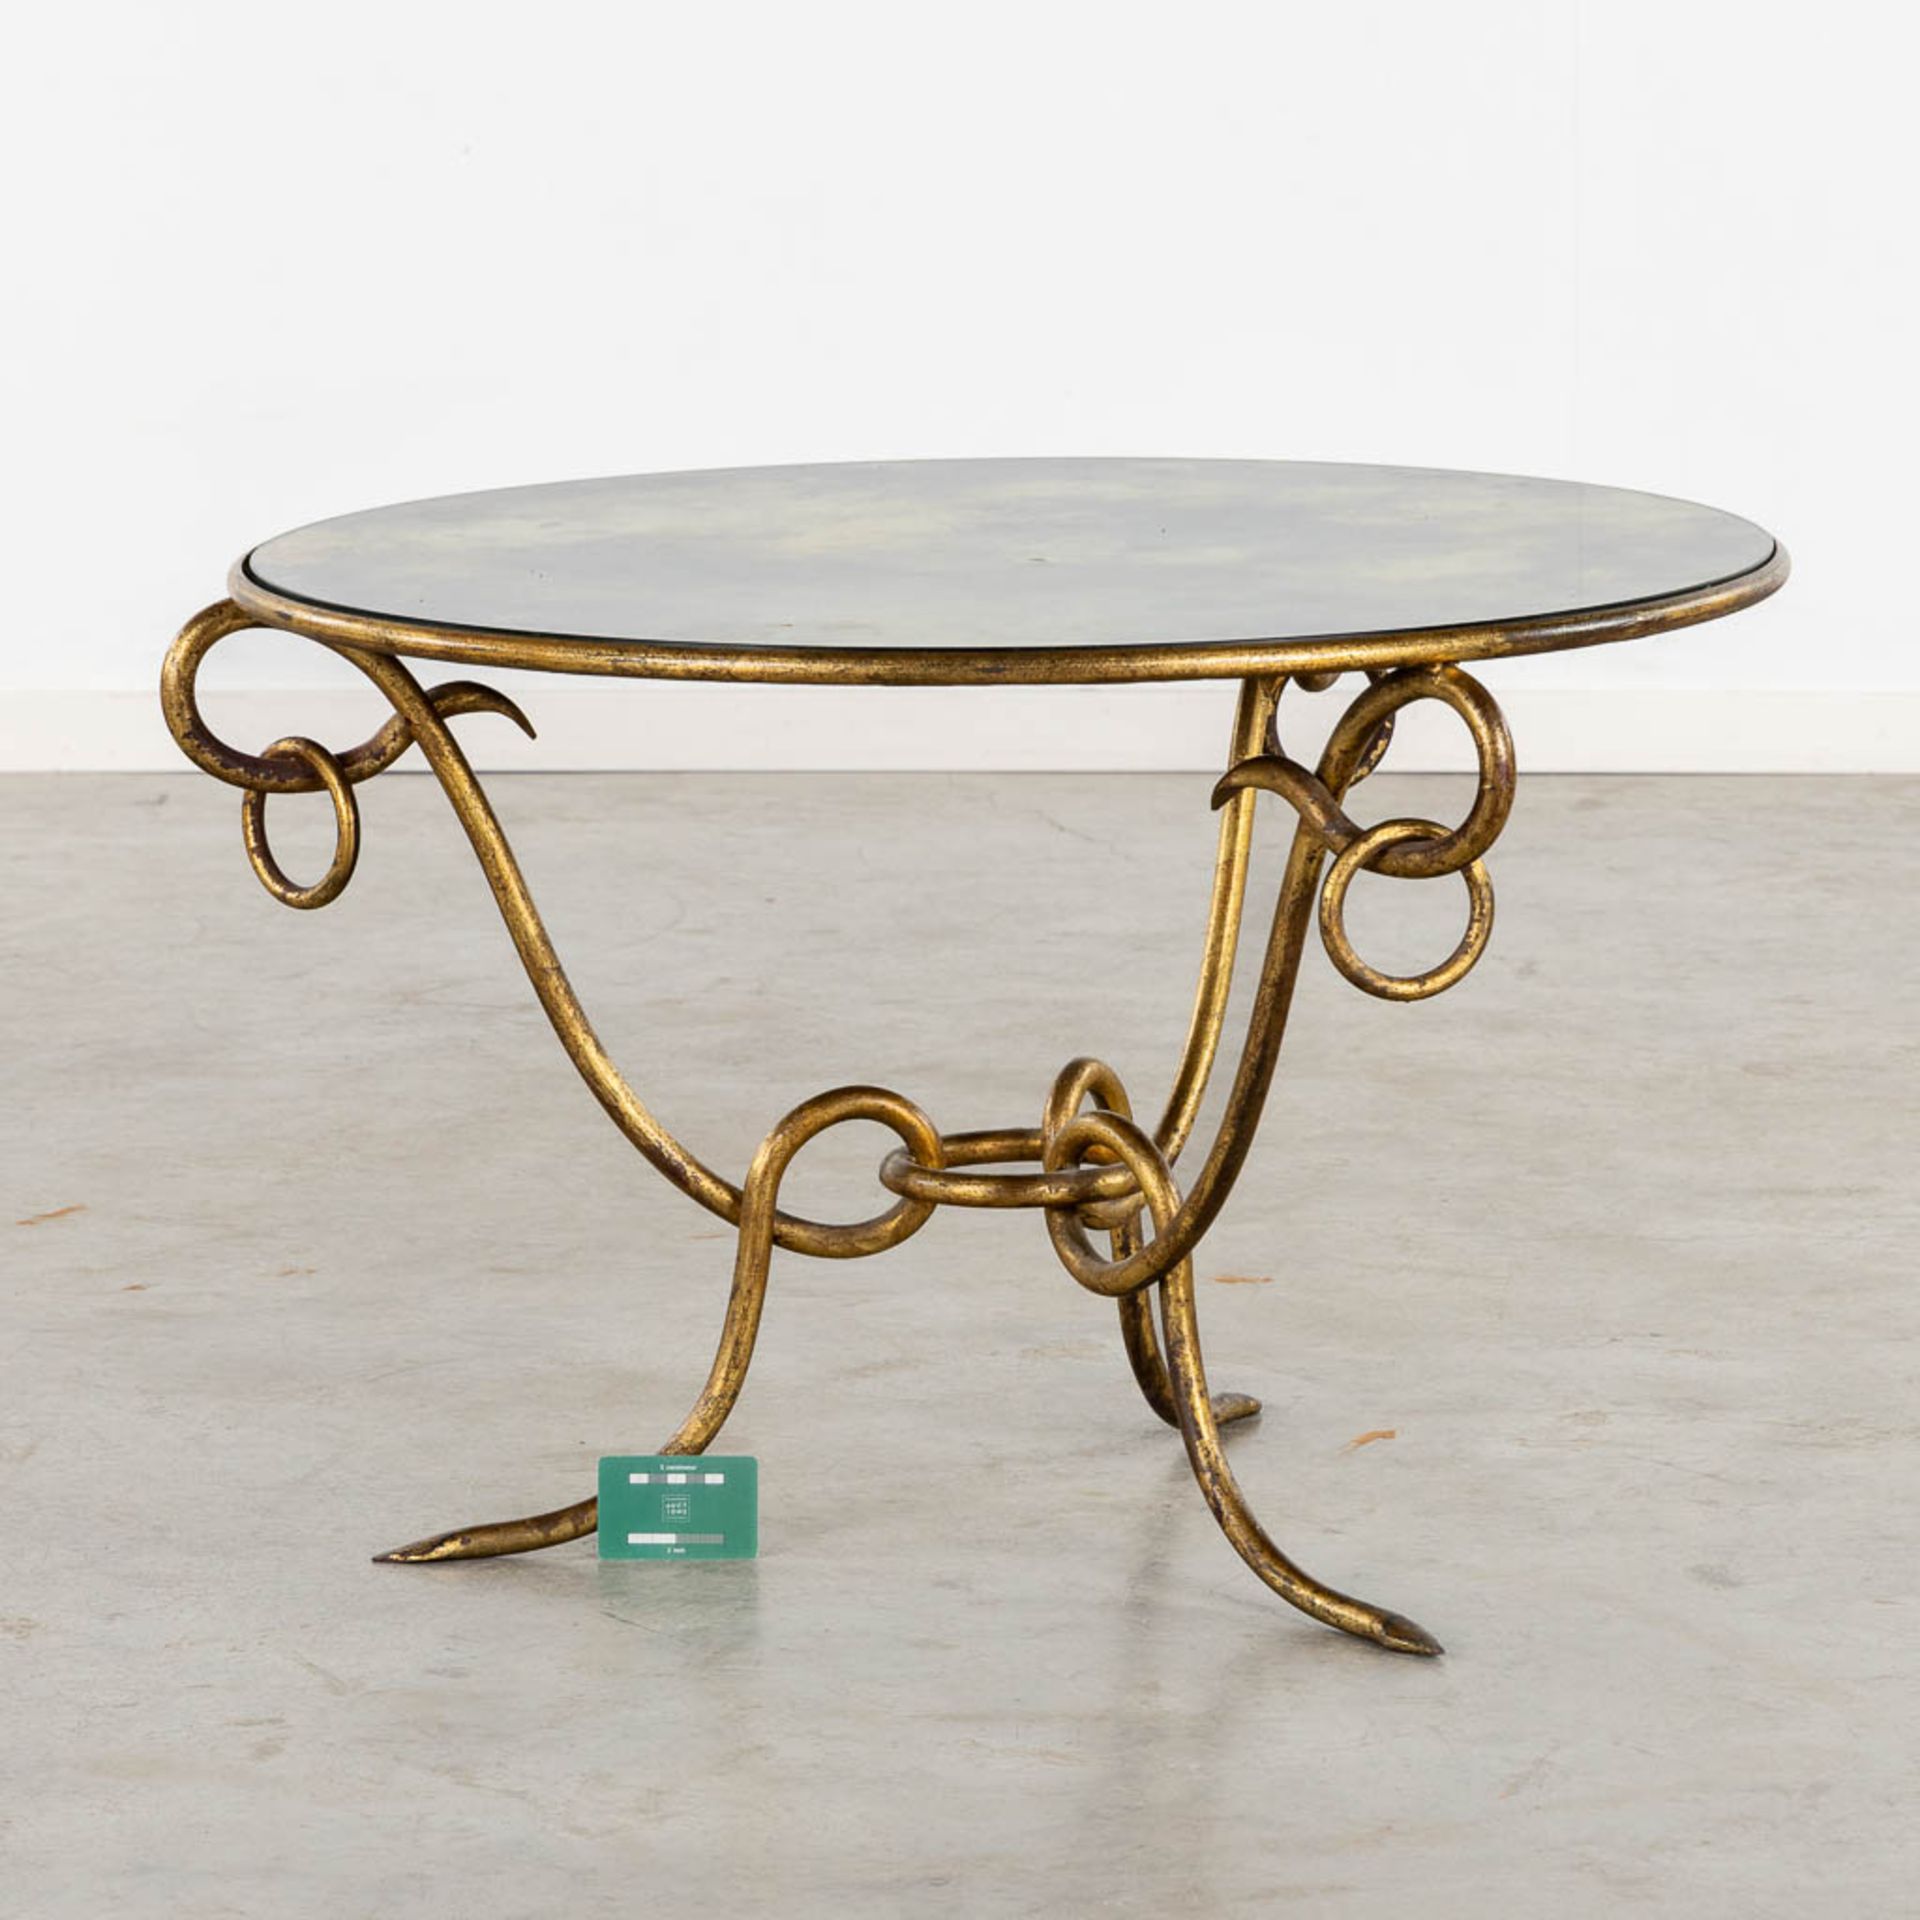 René DROUET (1899-1993) 'Round cofee table' (H:54 x D:87 cm) - Bild 2 aus 10